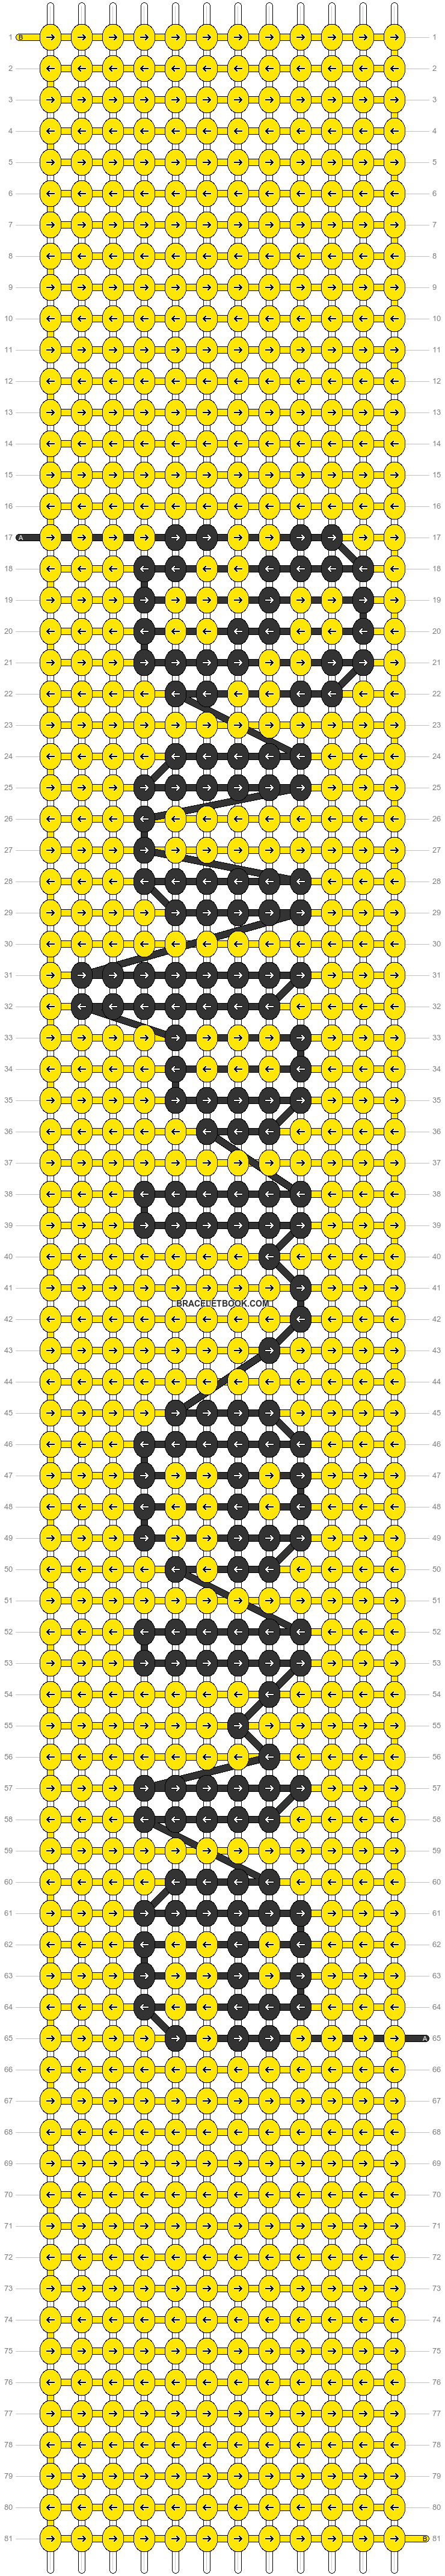 Alpha pattern #26846 variation #25371 pattern